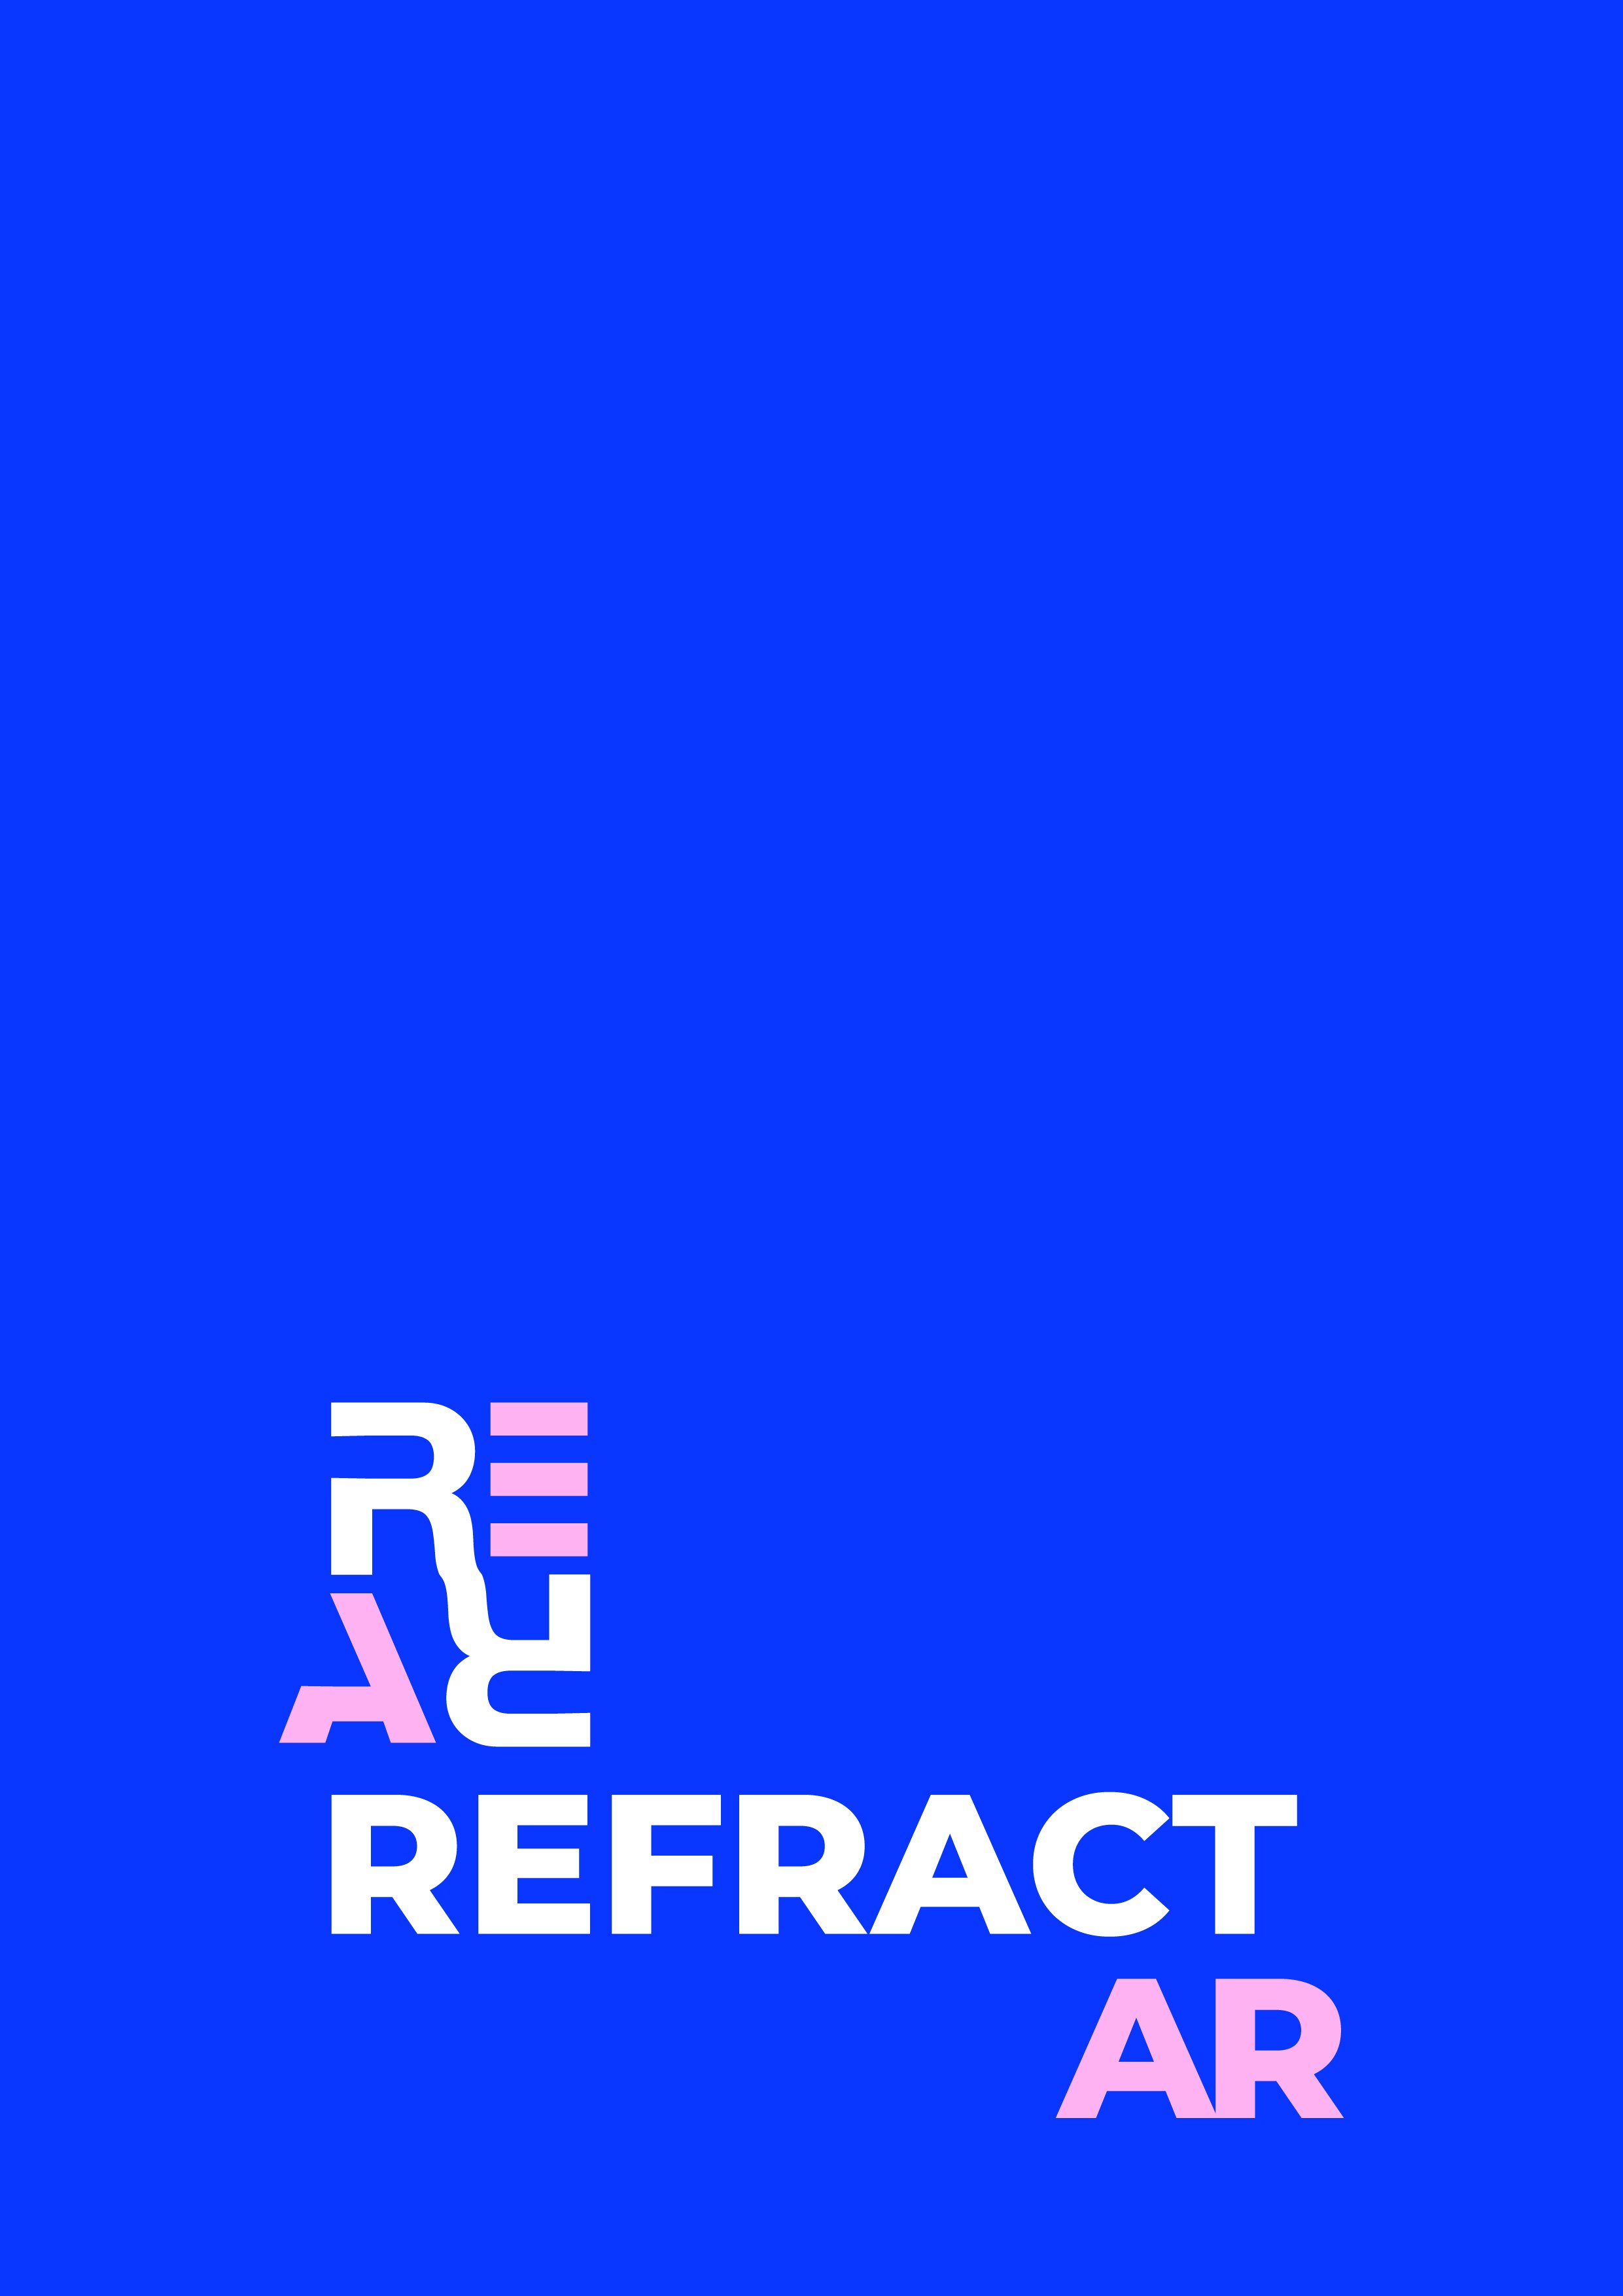 refractar-graphic-vertical-blue-logo.jpg